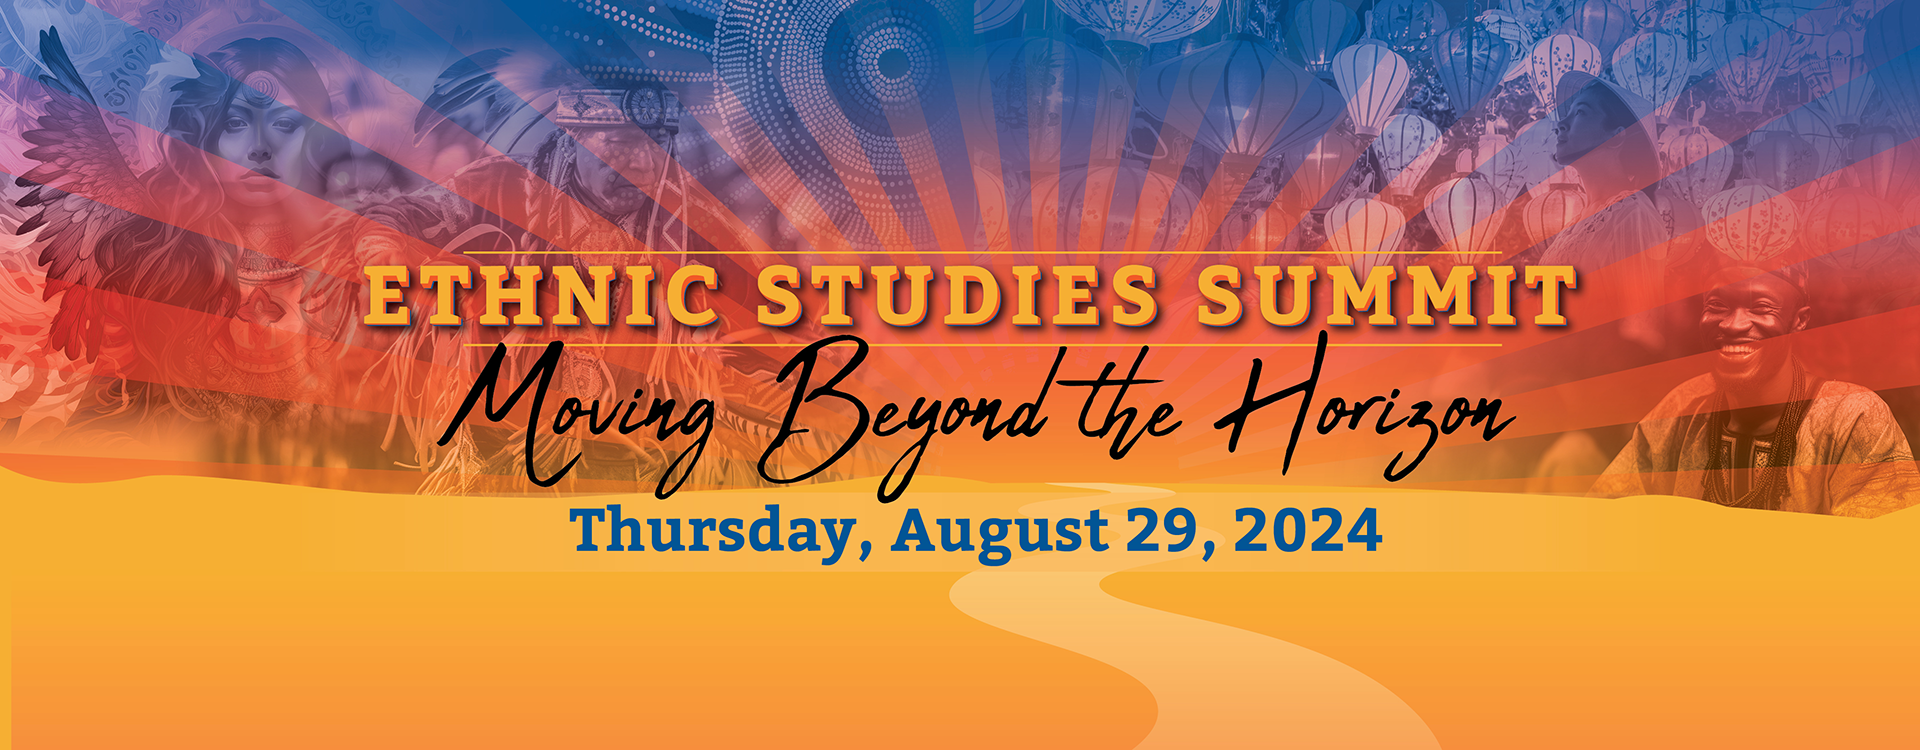 Ethnic Studies Summit. Moving Beyond the Horizon. Thursday, August 29, 2024